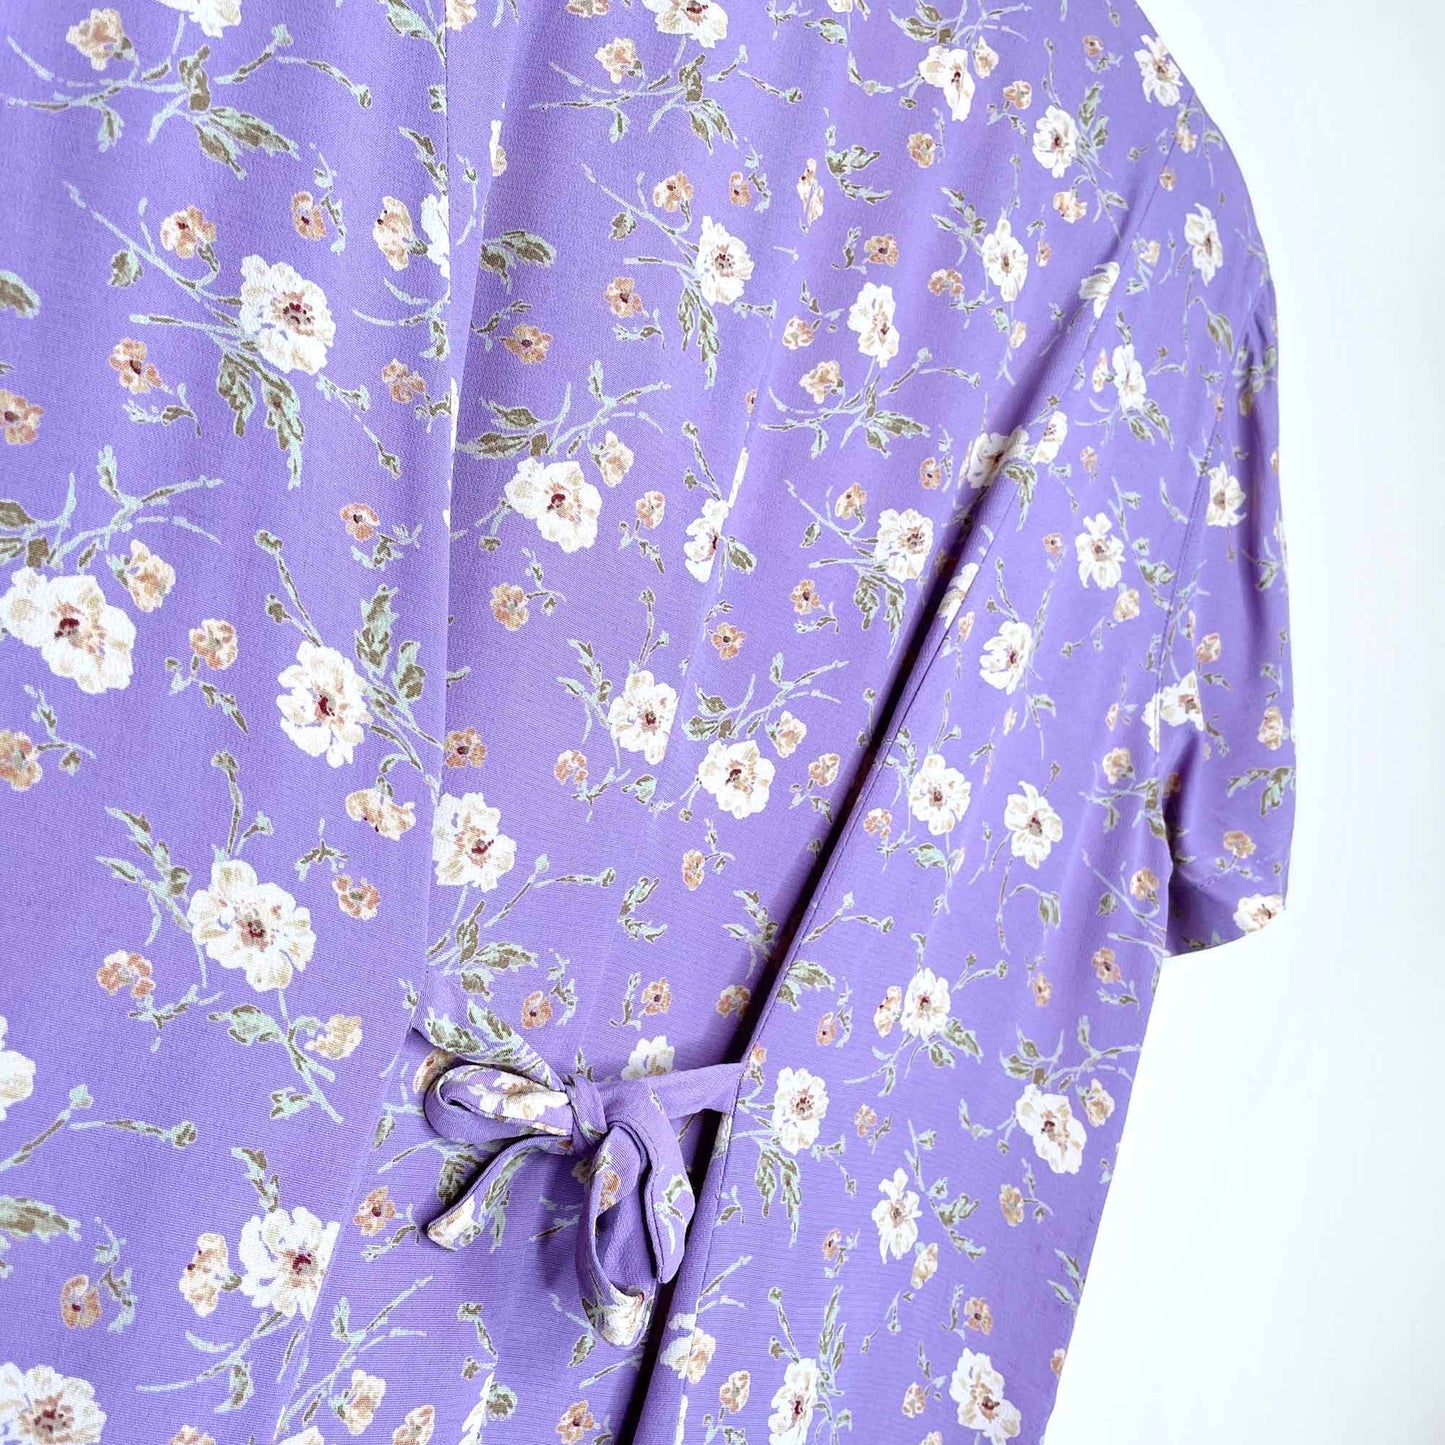 vintage 90's gap floral shirt dress - size small